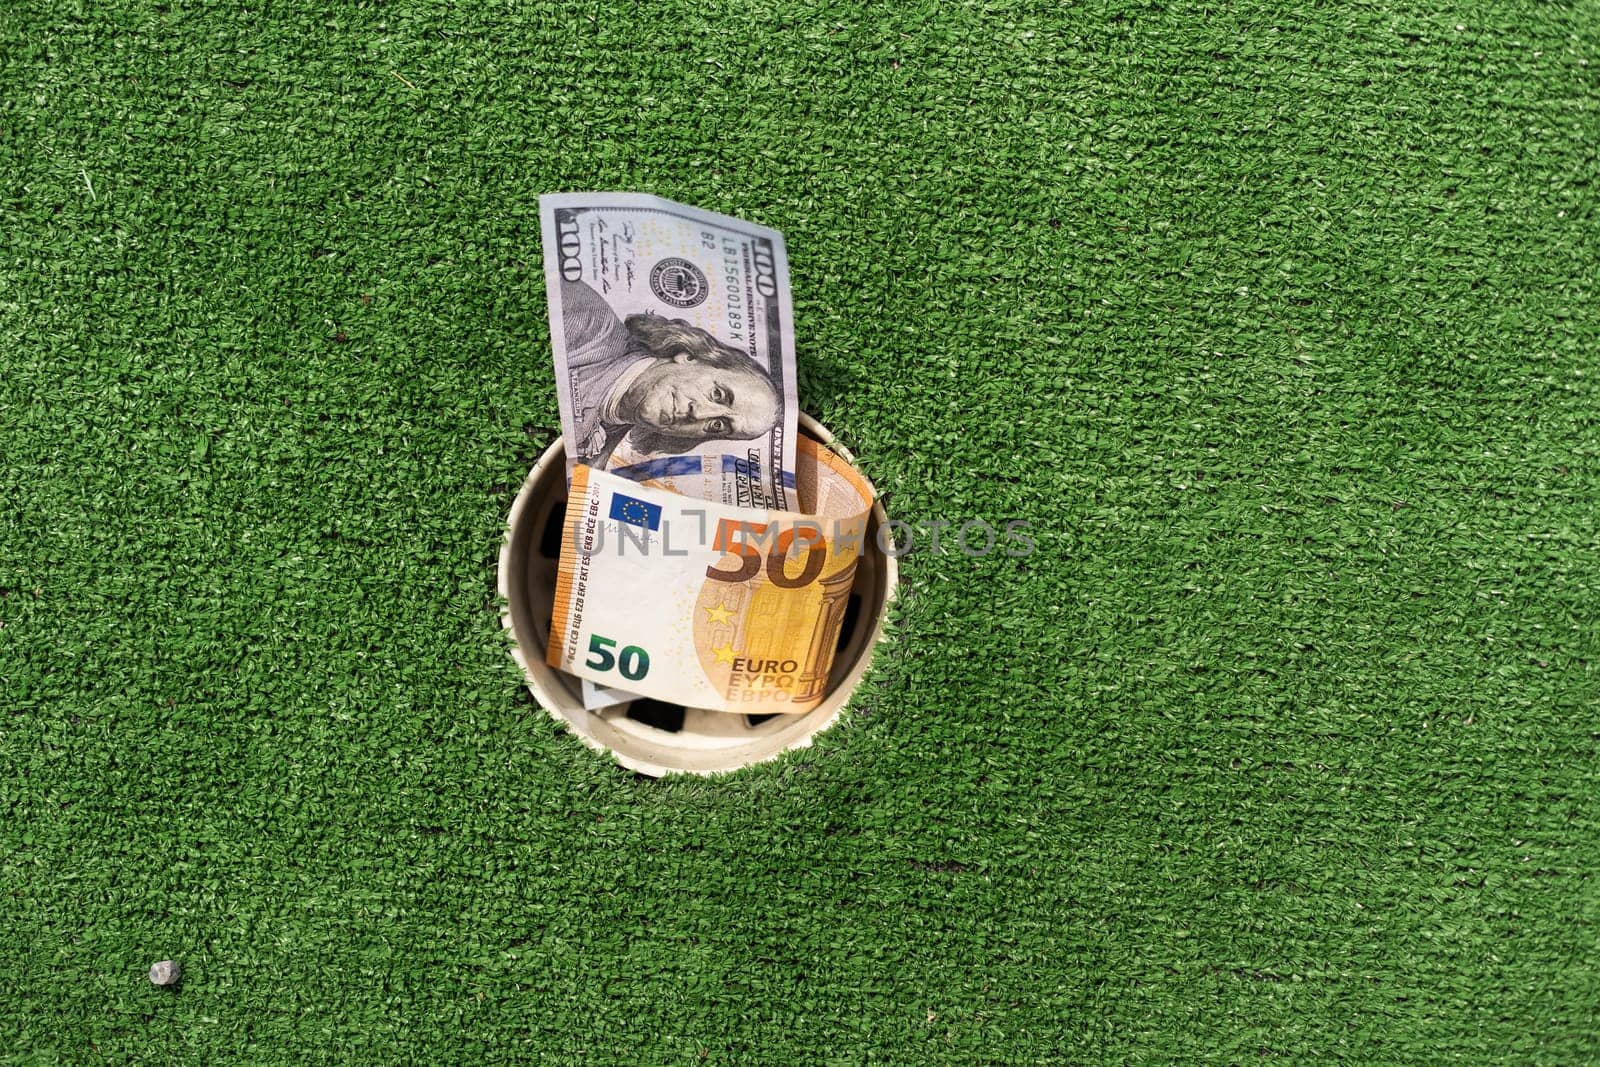 Mini Golf club, money on the artificial grass by Andelov13